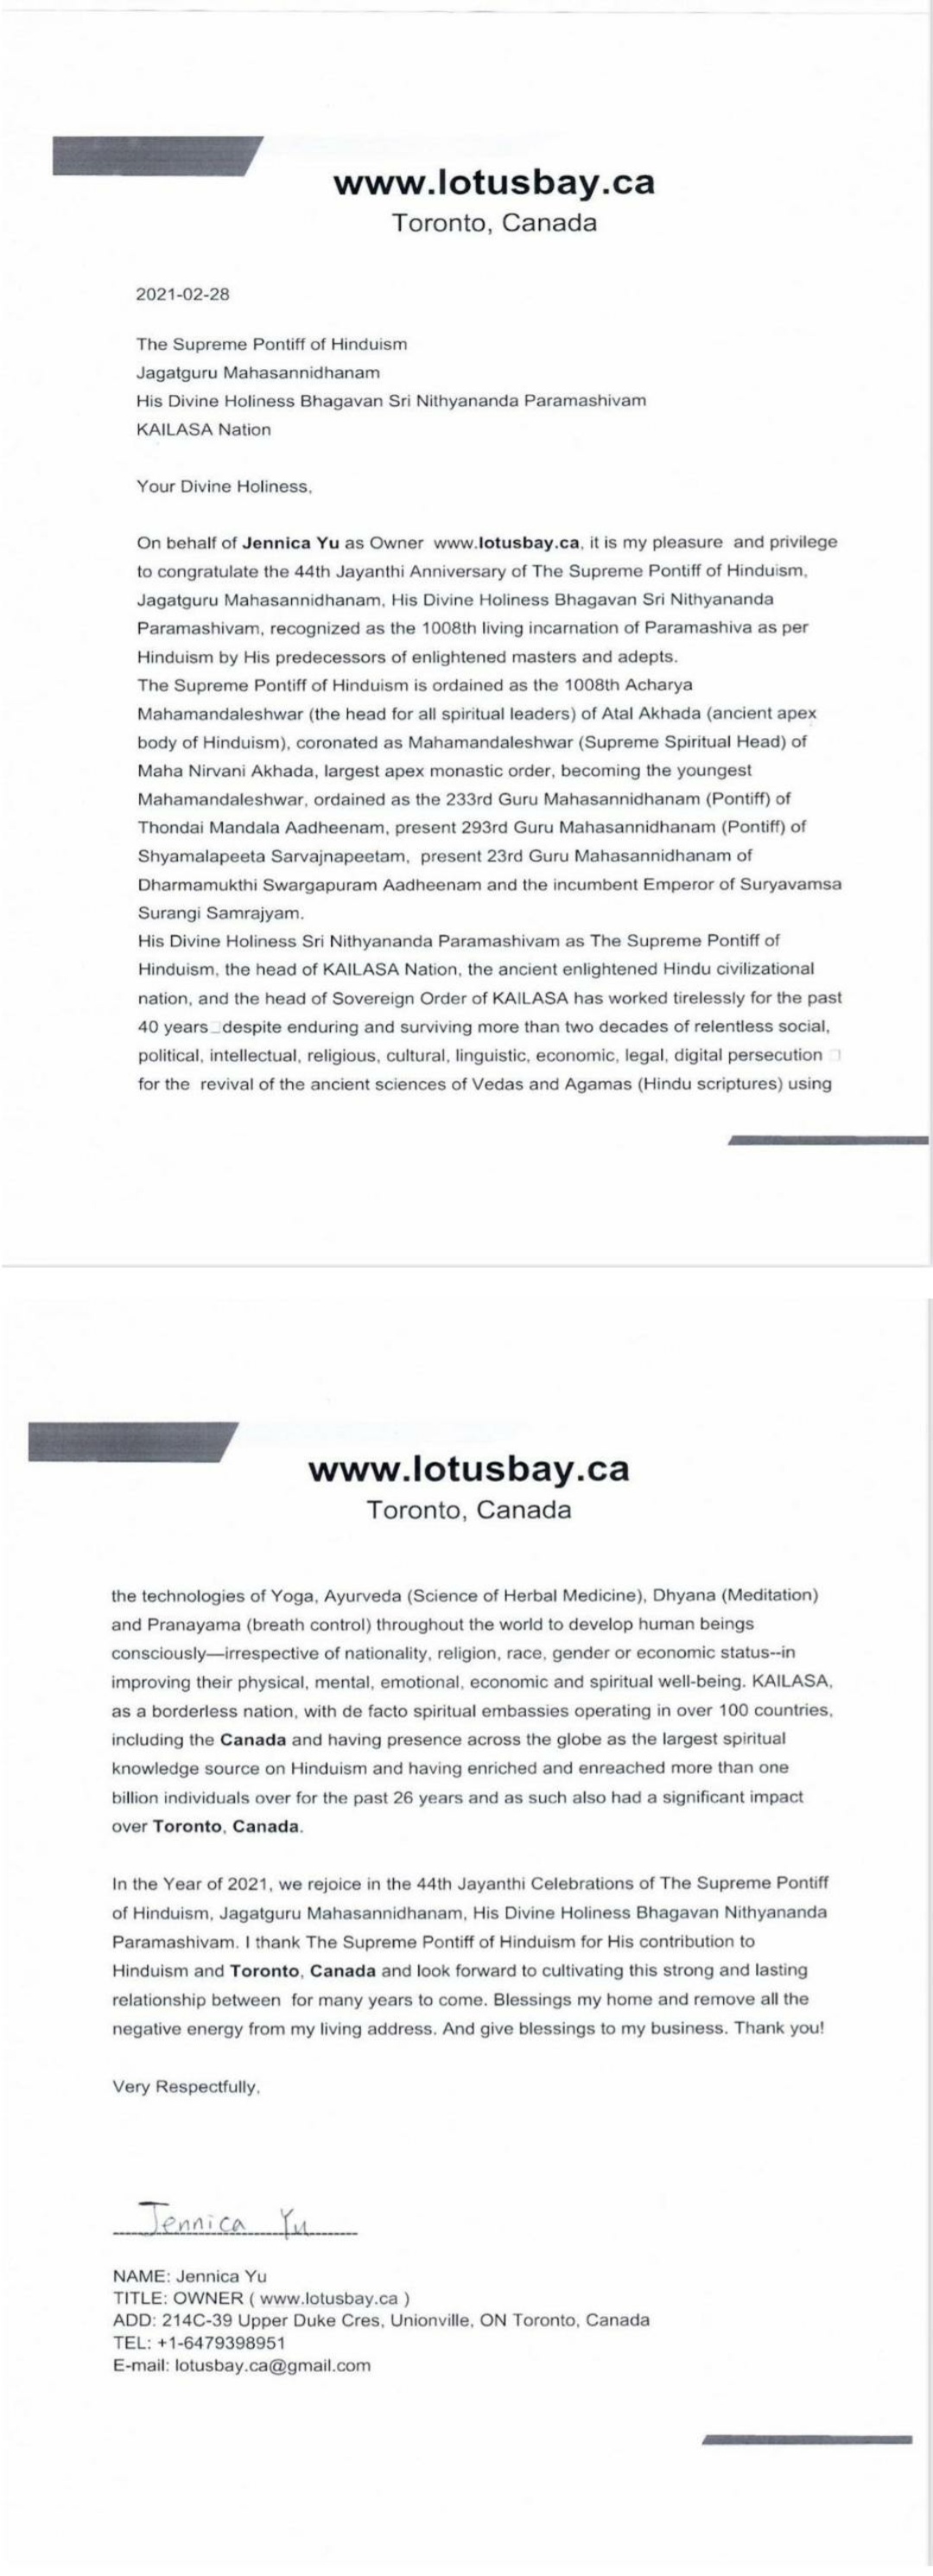 Canada---Jennica-Yu---Feb-28--2021-(Proclamation)-1HOihcLMoXCEs IxDD6hhE6j5FBI5I3hq.pdf